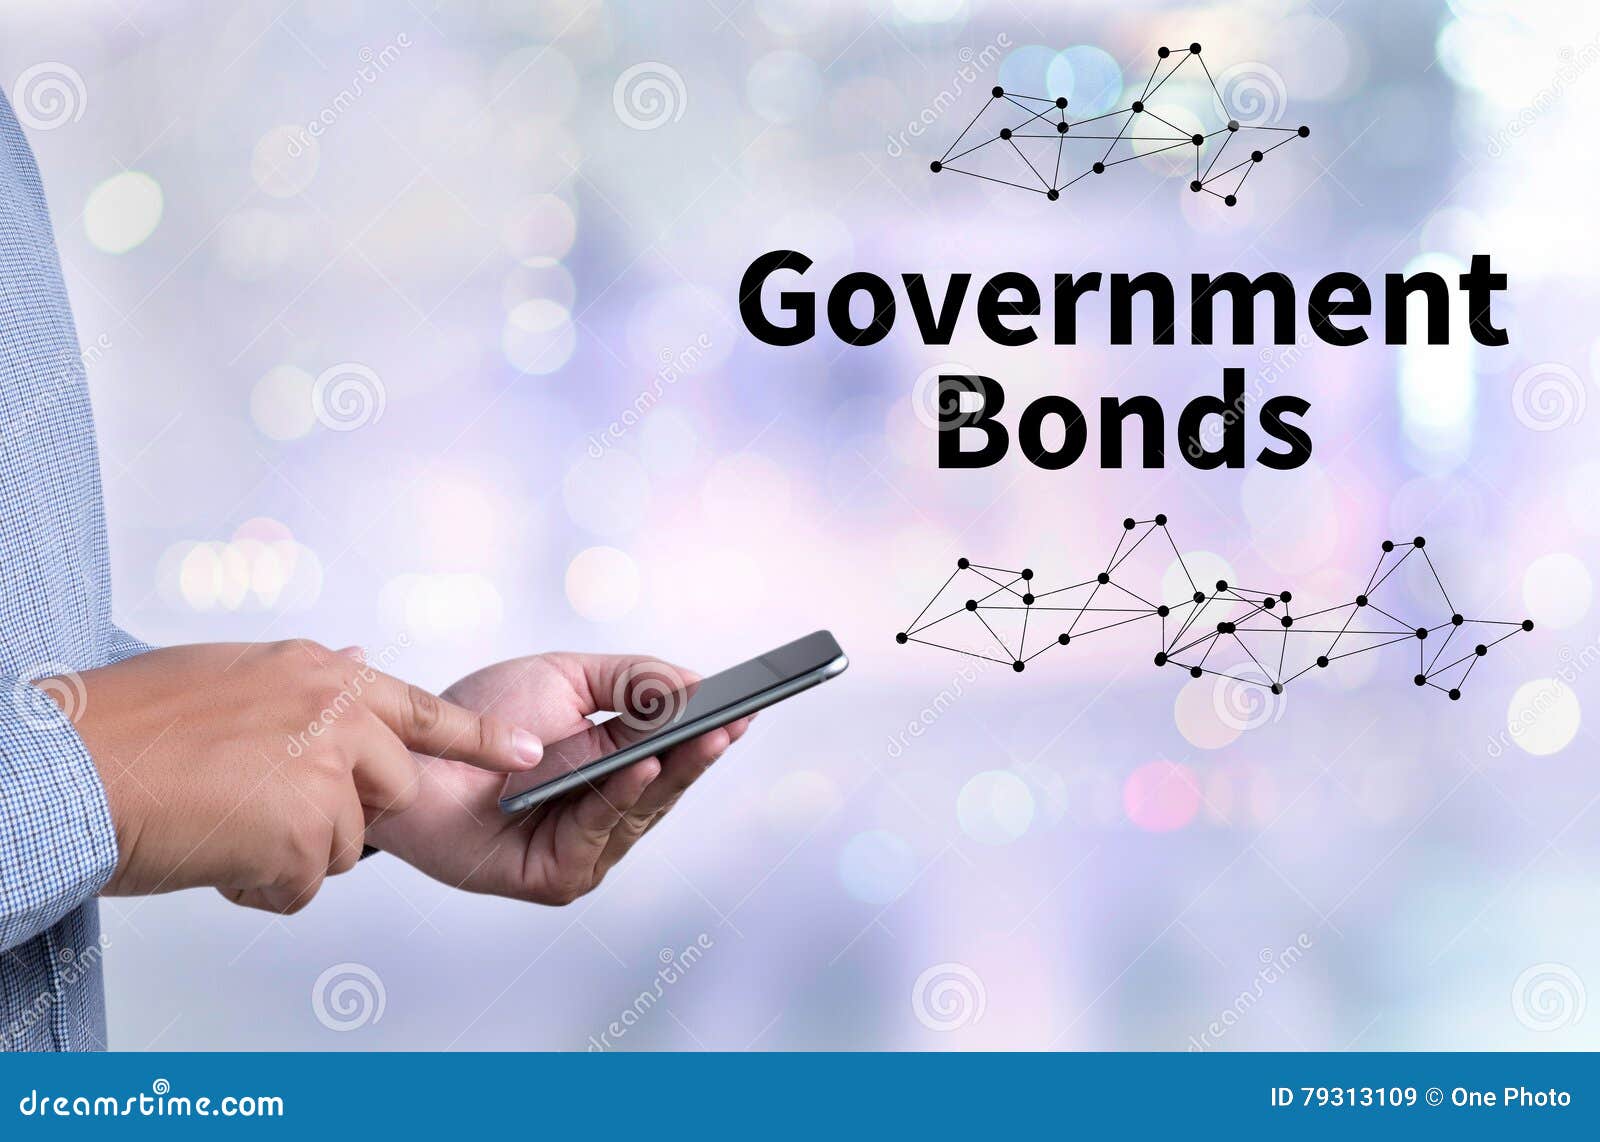 government bonds, bond market